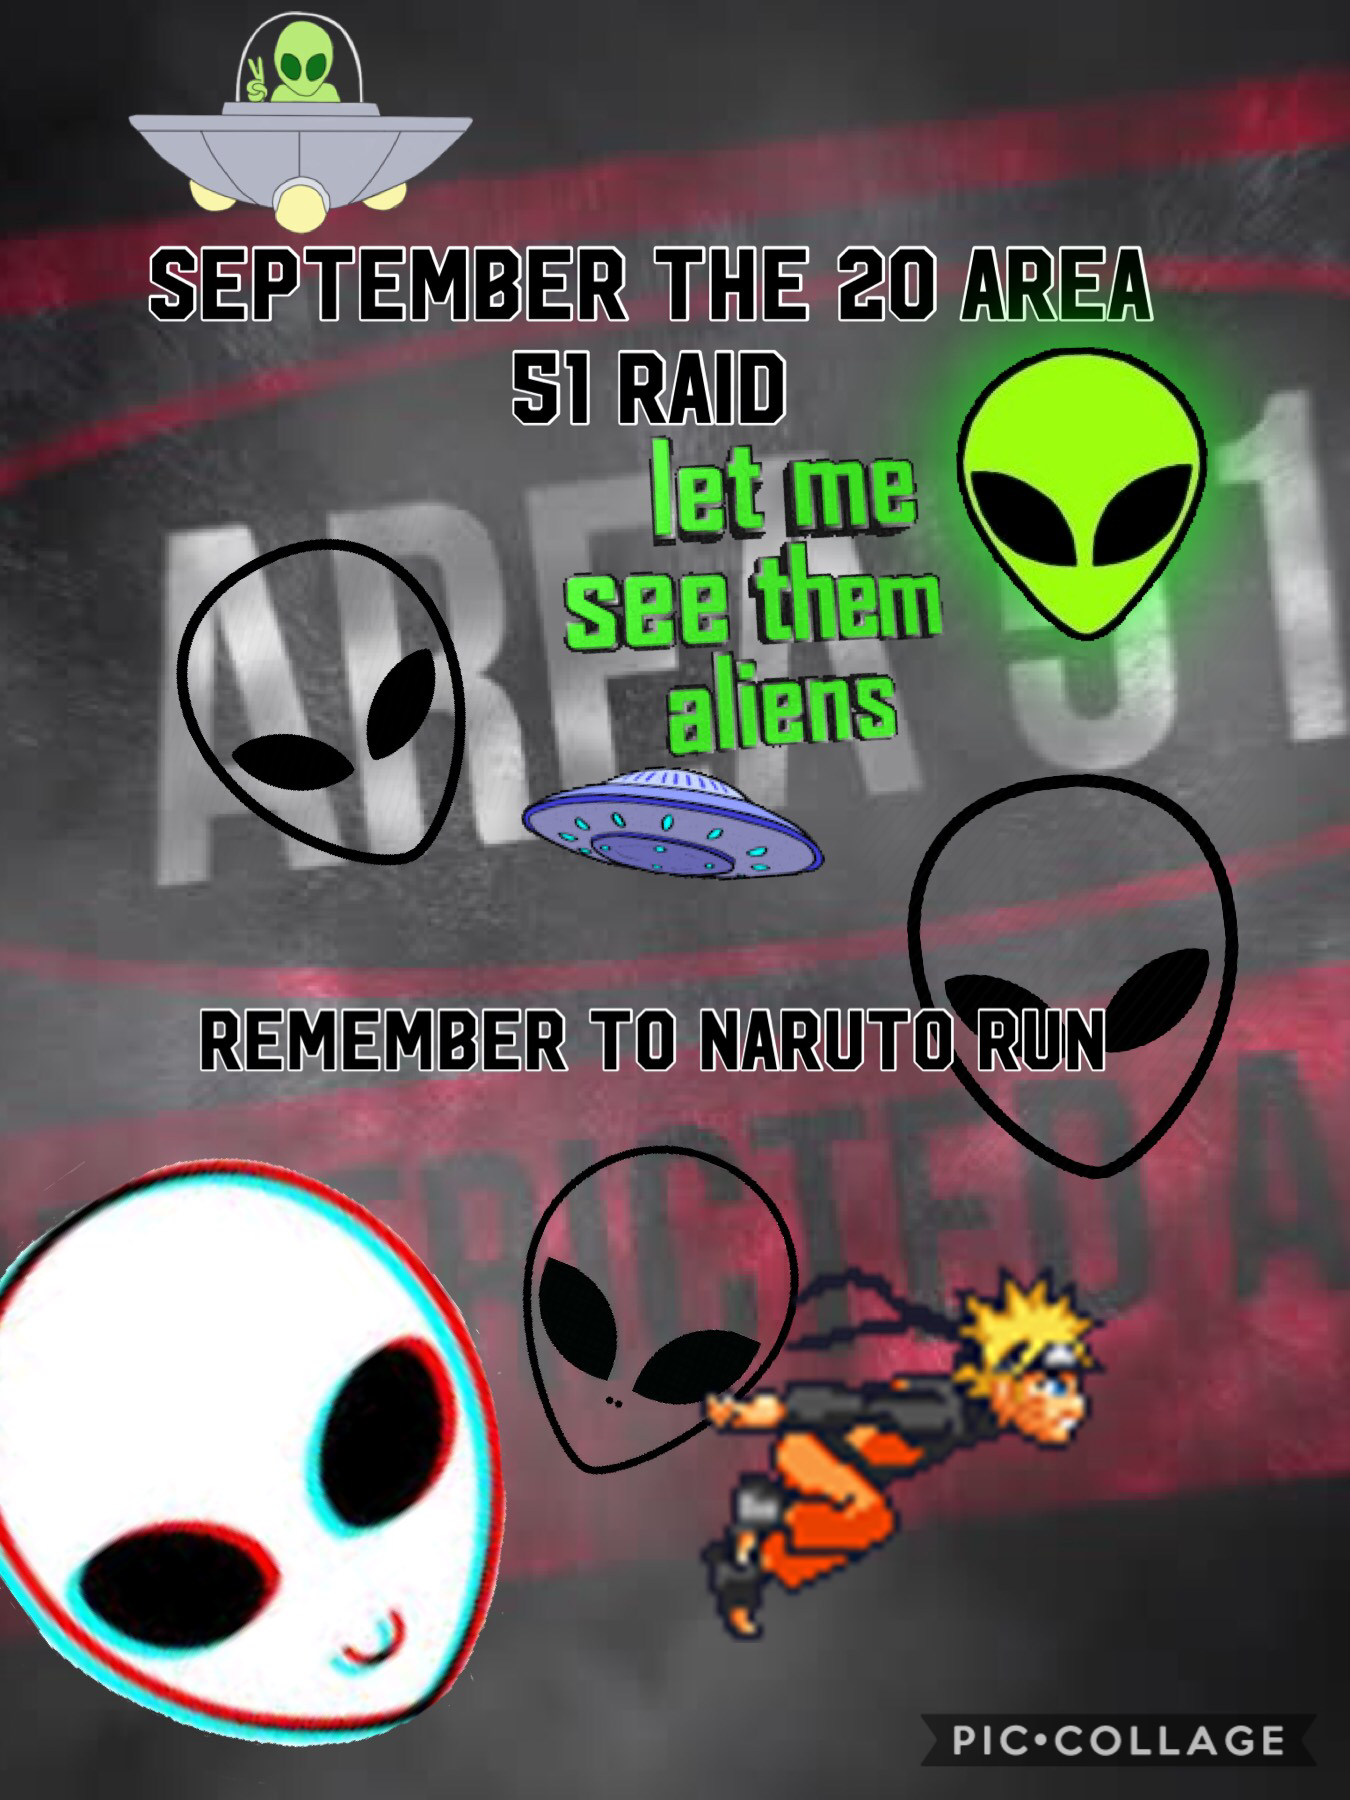 Lol Area 51 raid I’ll be there 